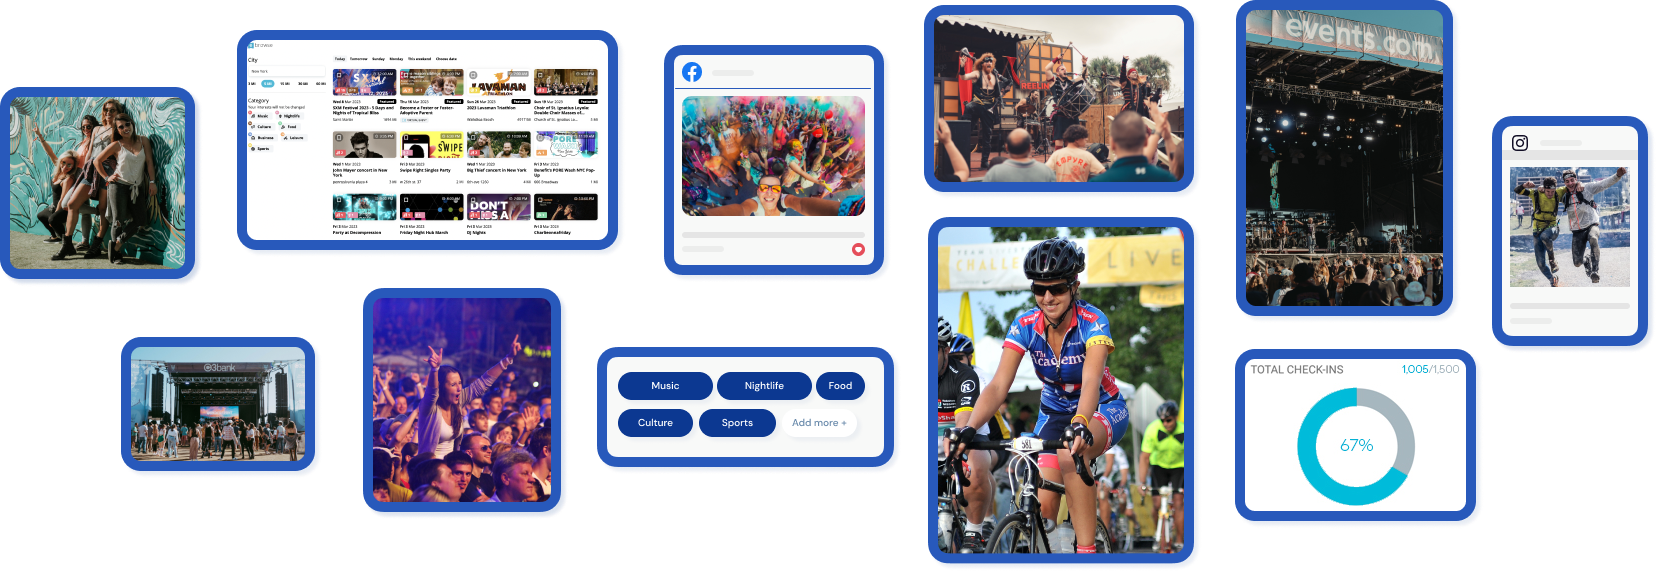 Collage of images showcasing events.com platform